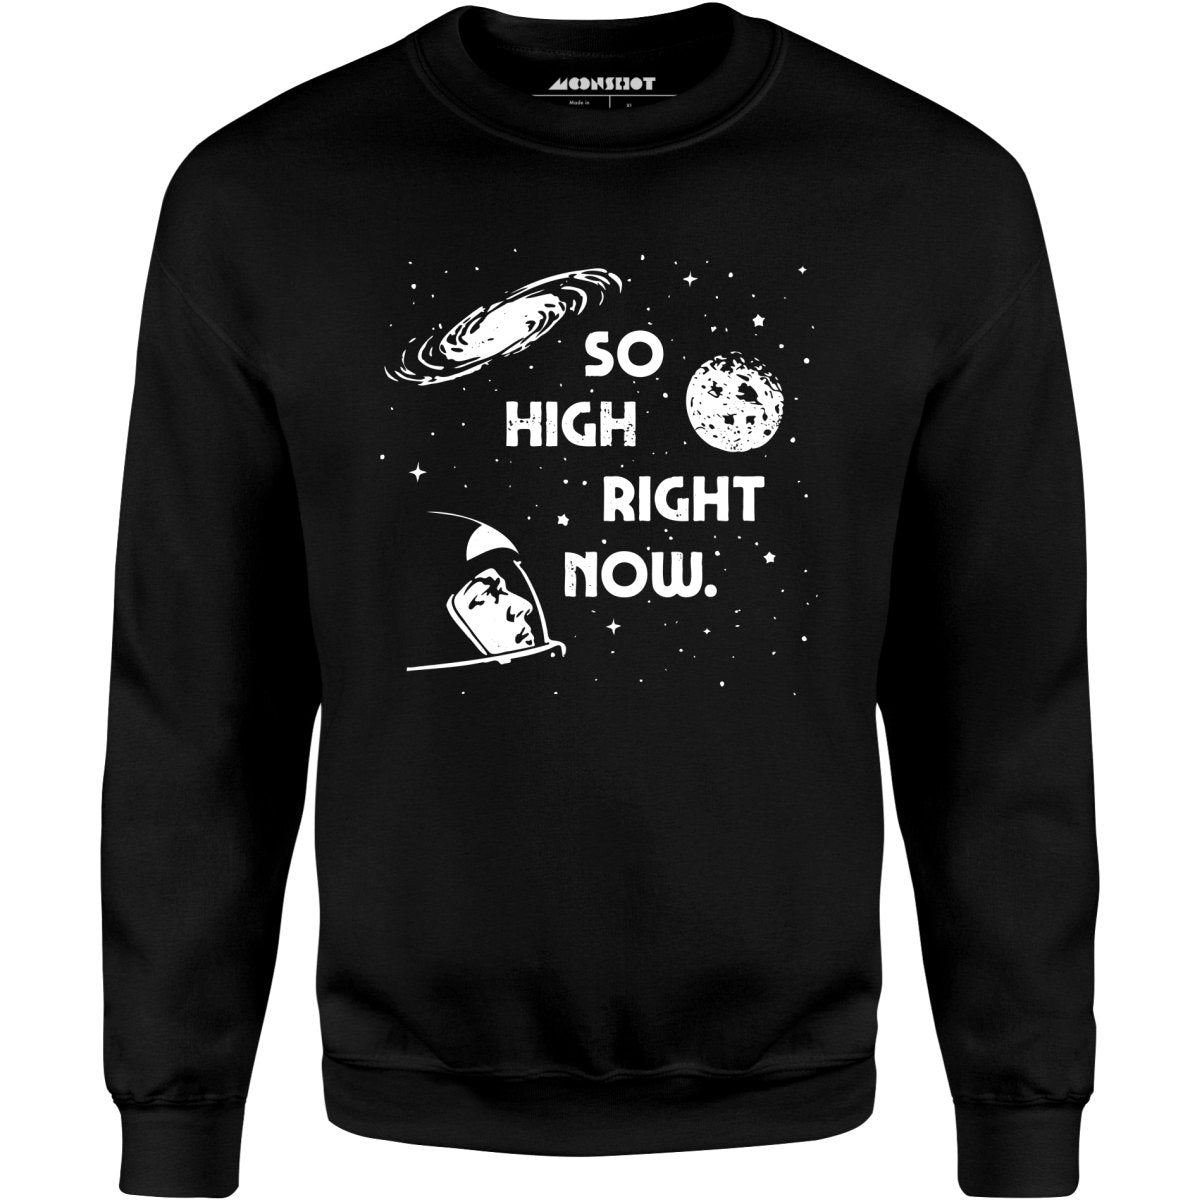 So High Right Now - Unisex Sweatshirt